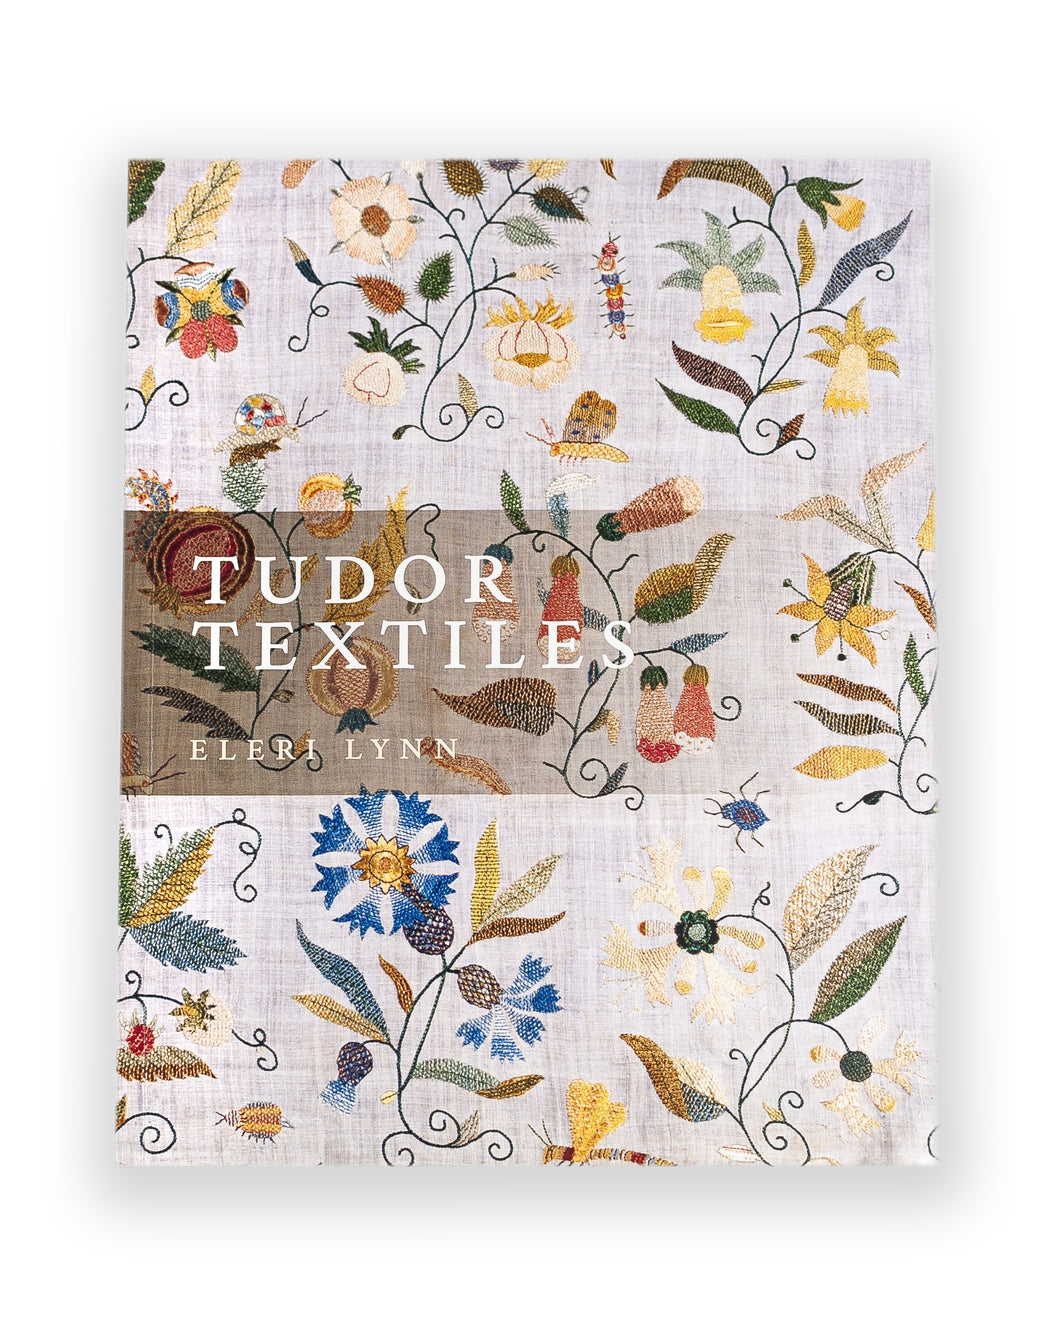 Font cover of the book Tudor Textiles by Eleri Lynn 